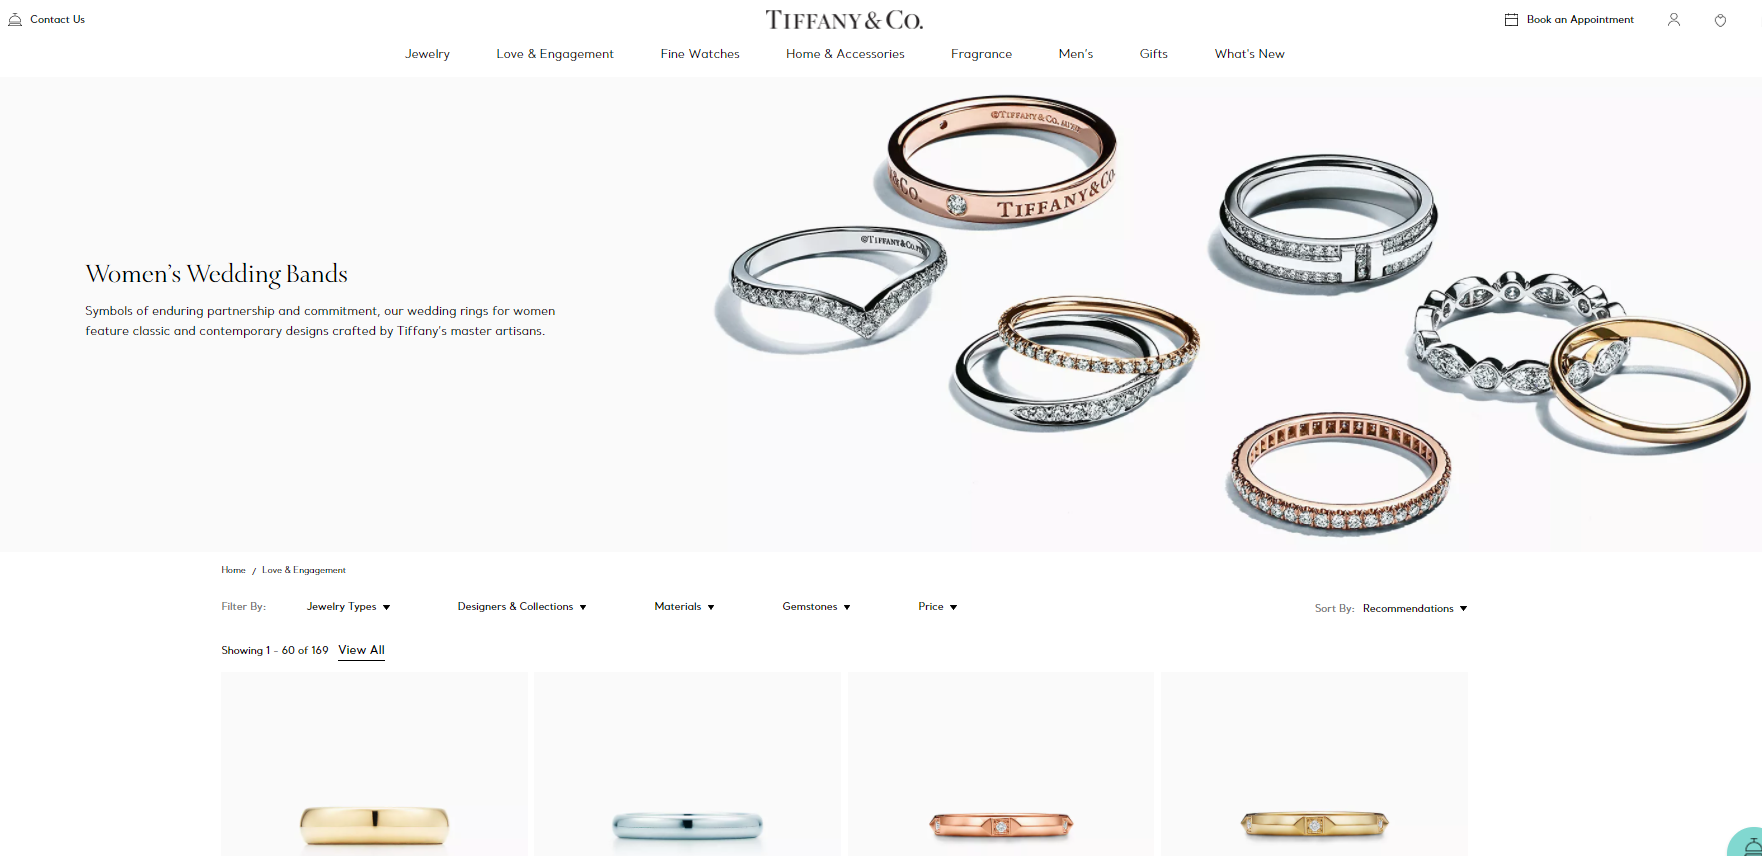 Tiffany & Co. category page